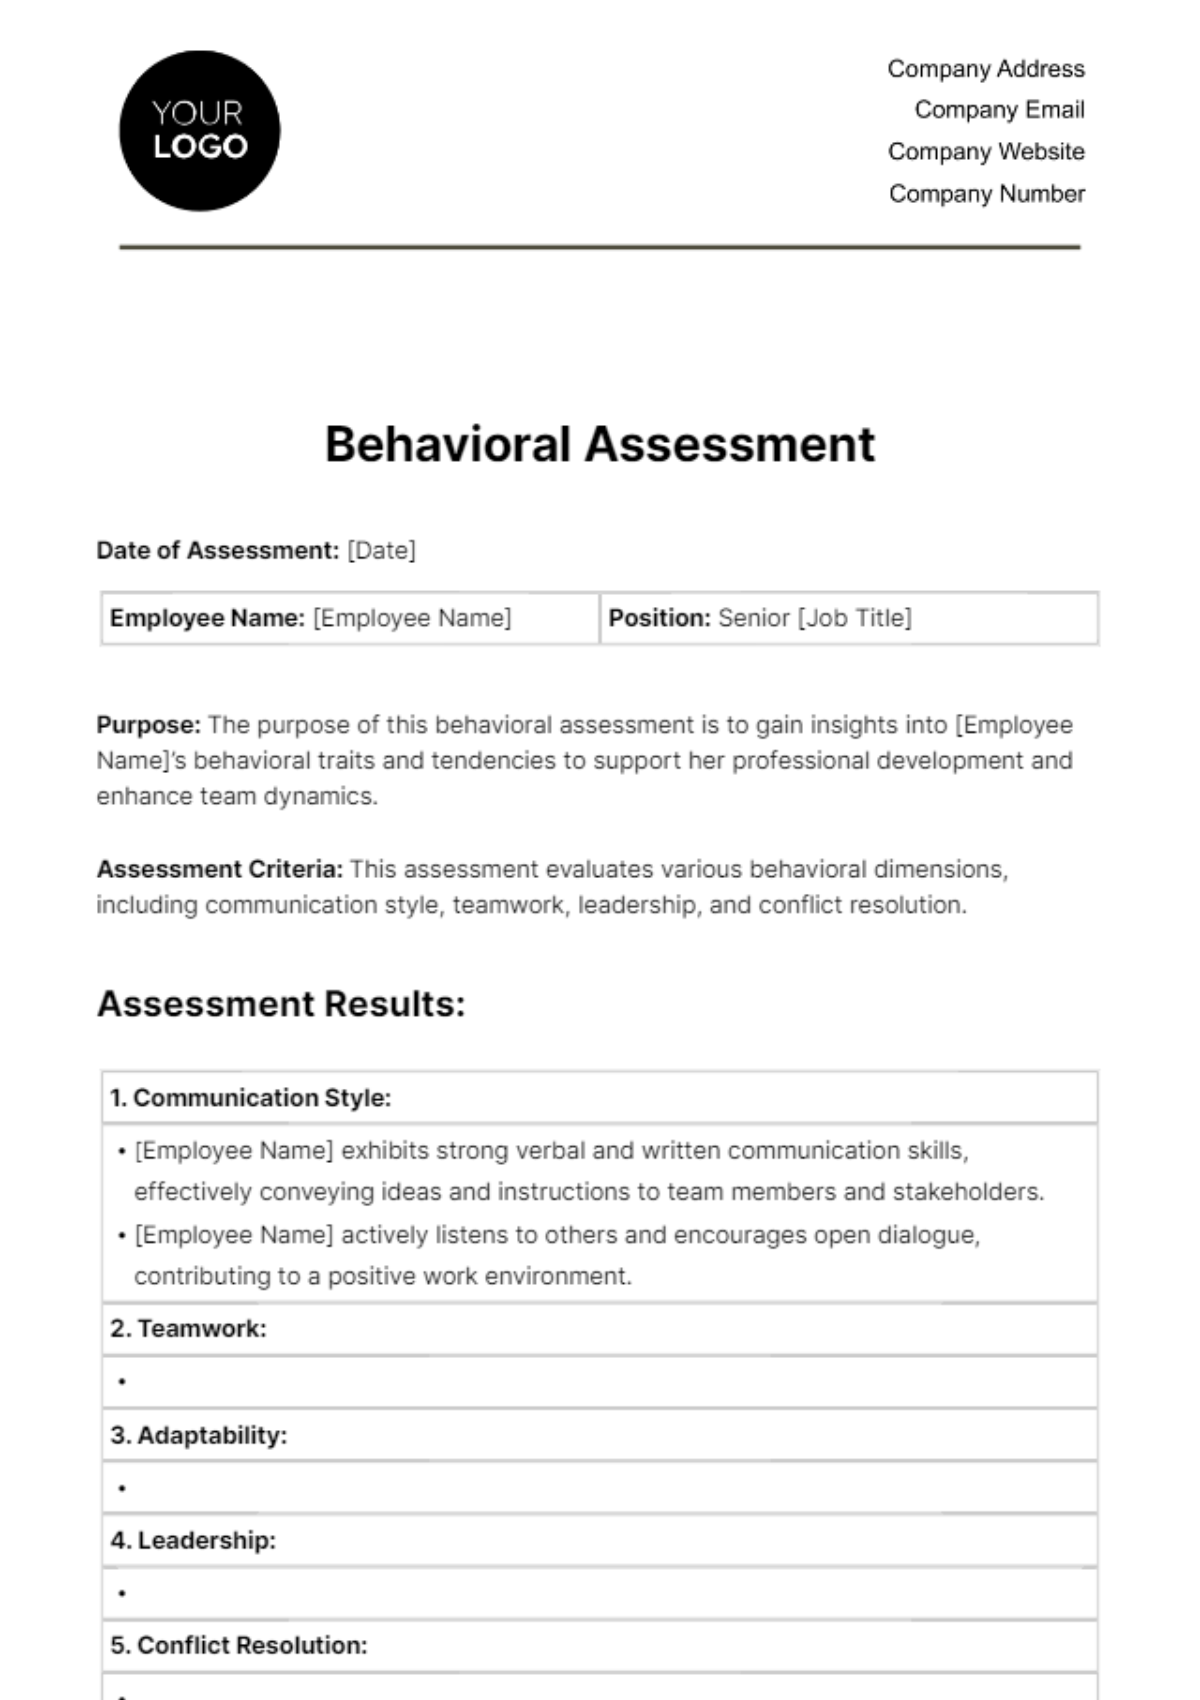 Free Behavioral Assessment HR Template